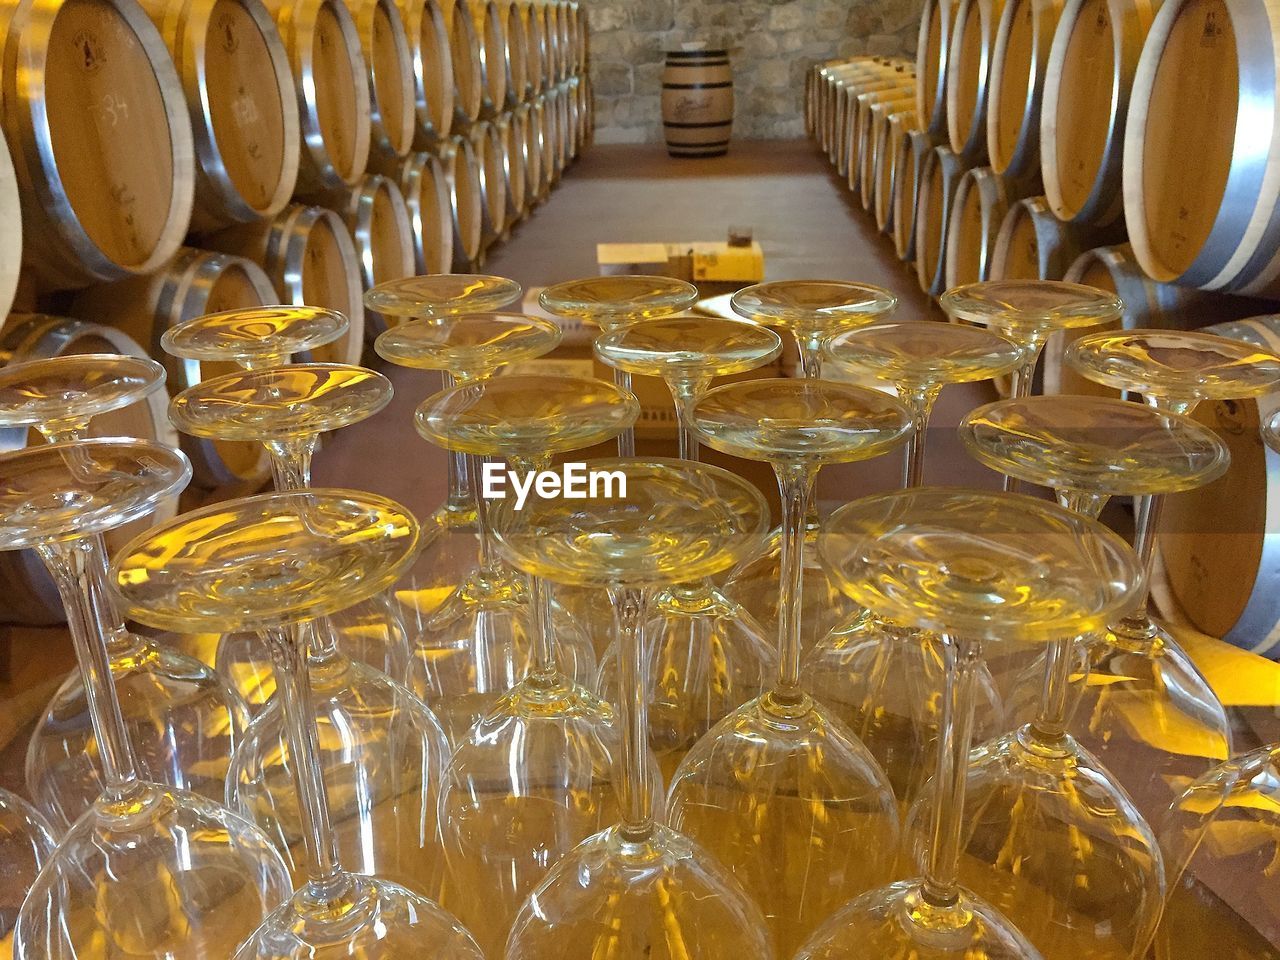 Upside down wineglasses on table against barrels in cellar